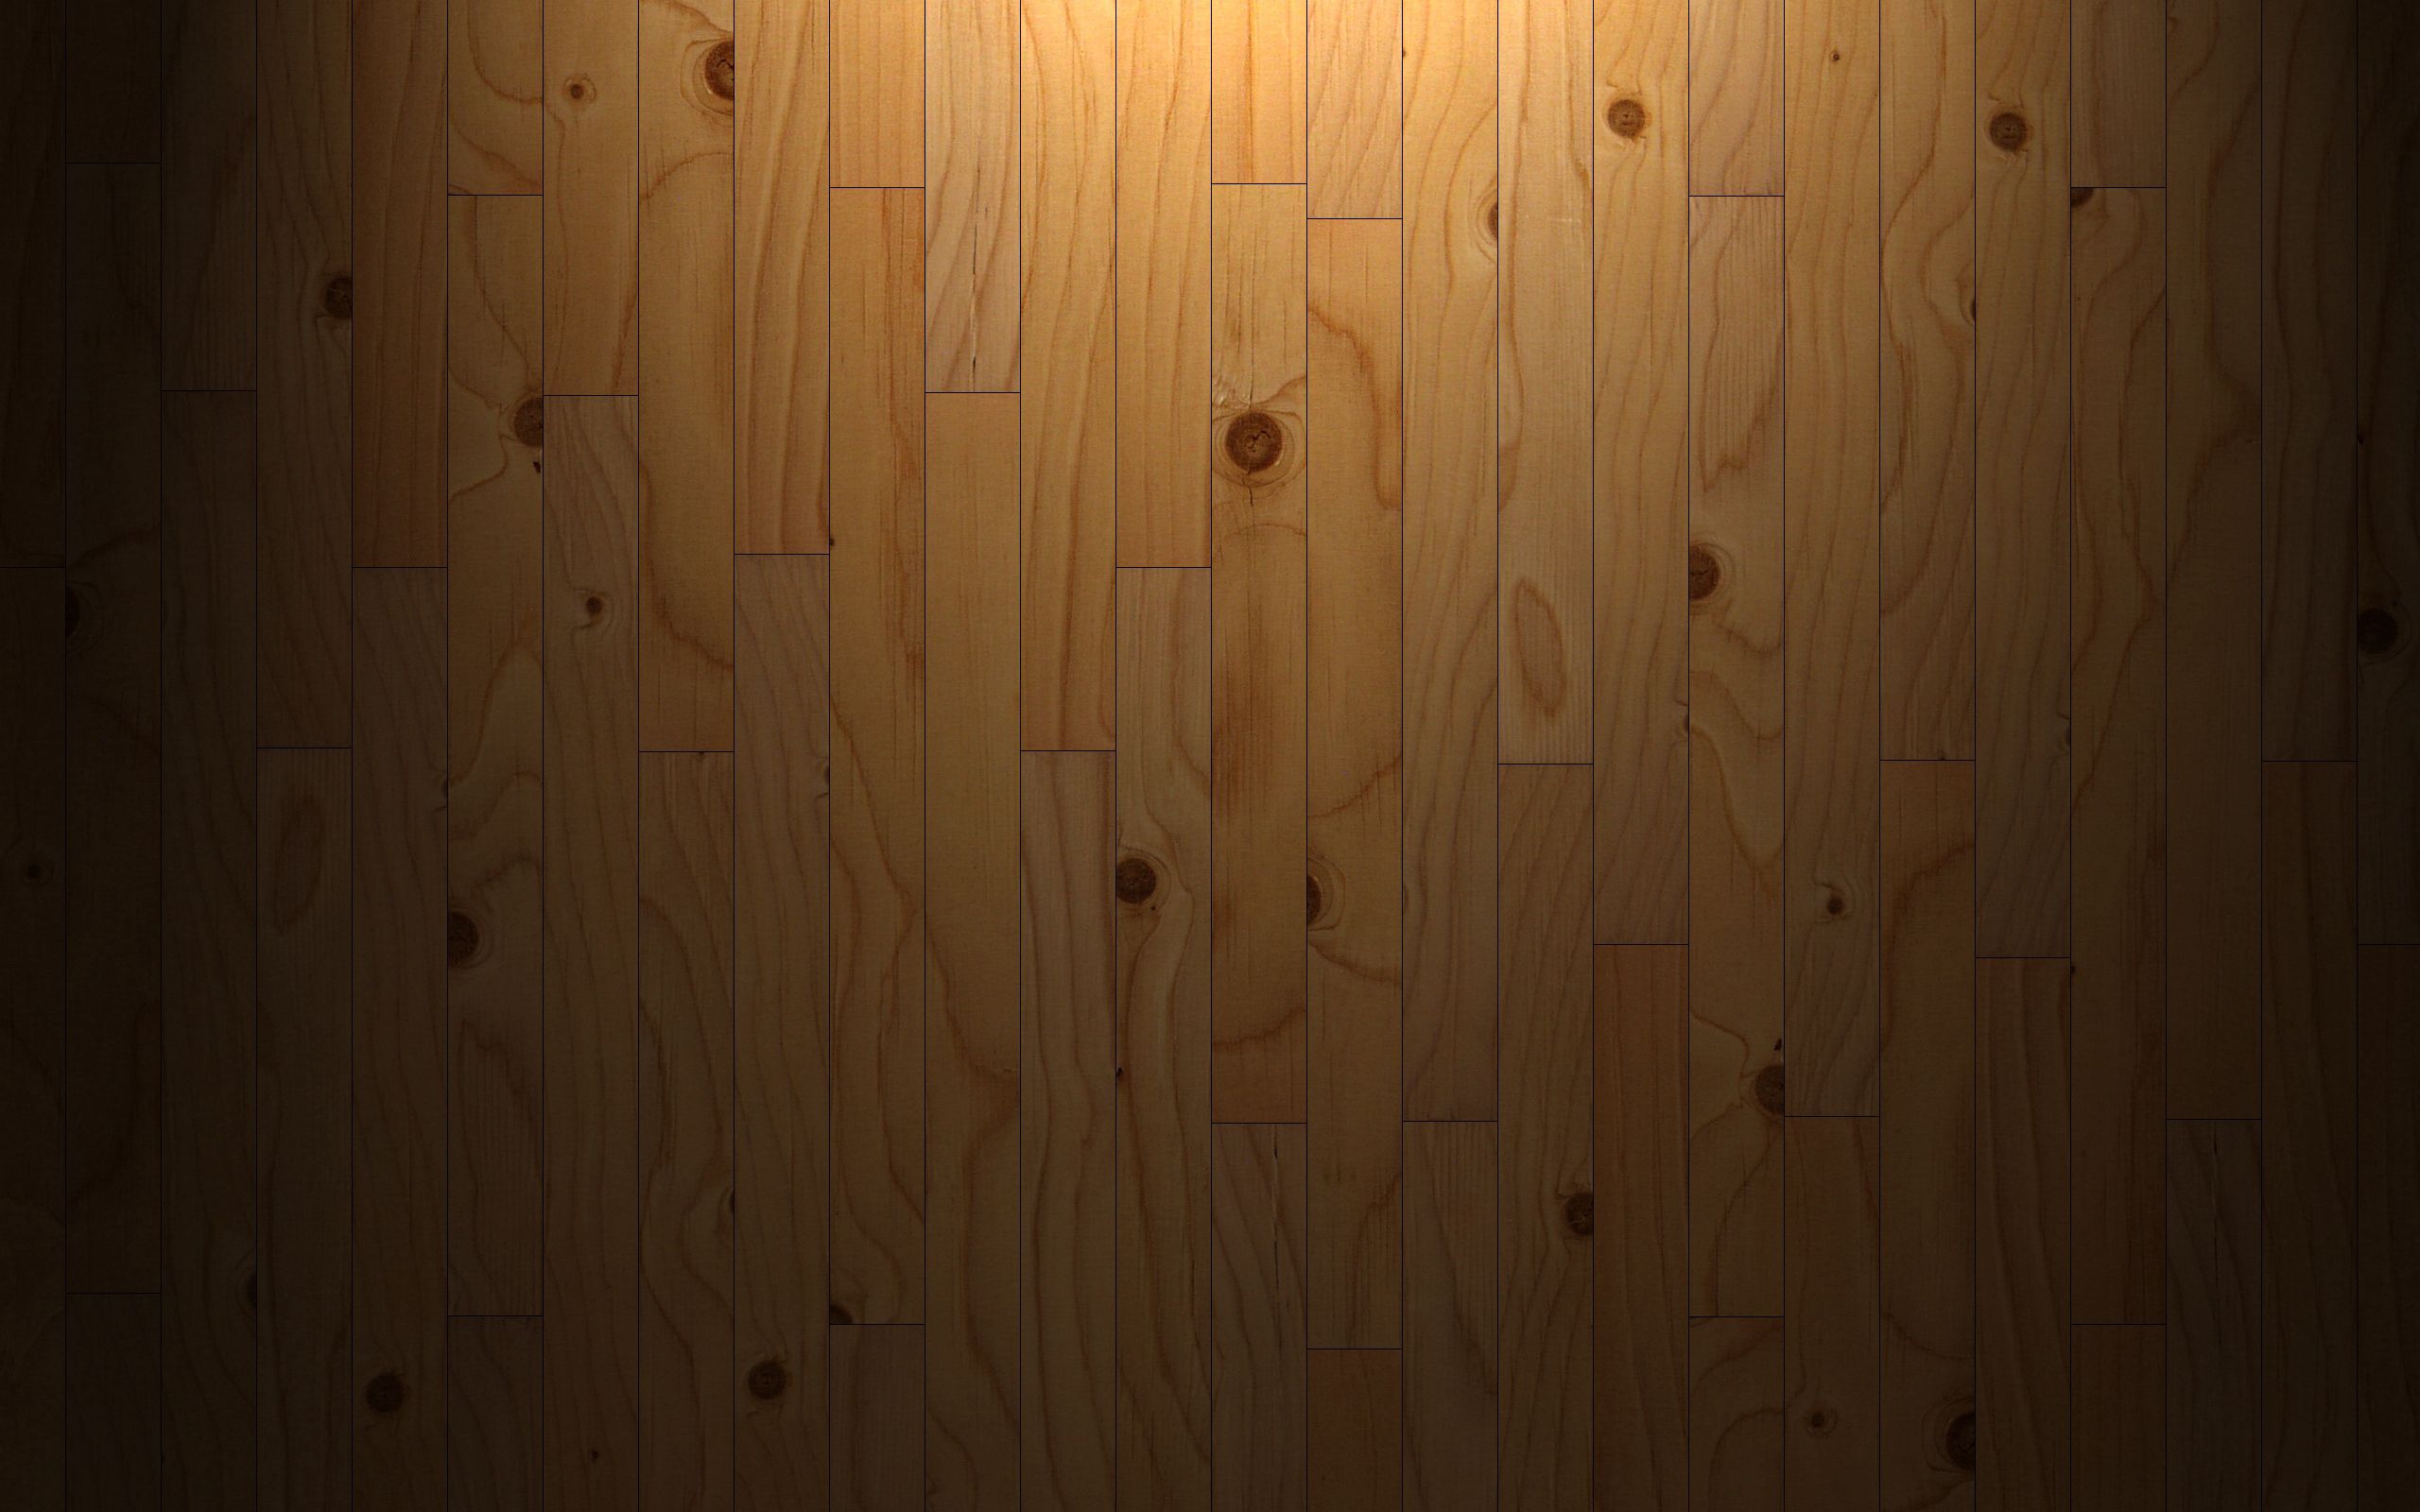 wood, streaks, board, textures, stripes, texture, tree, planks, parquet cellphone